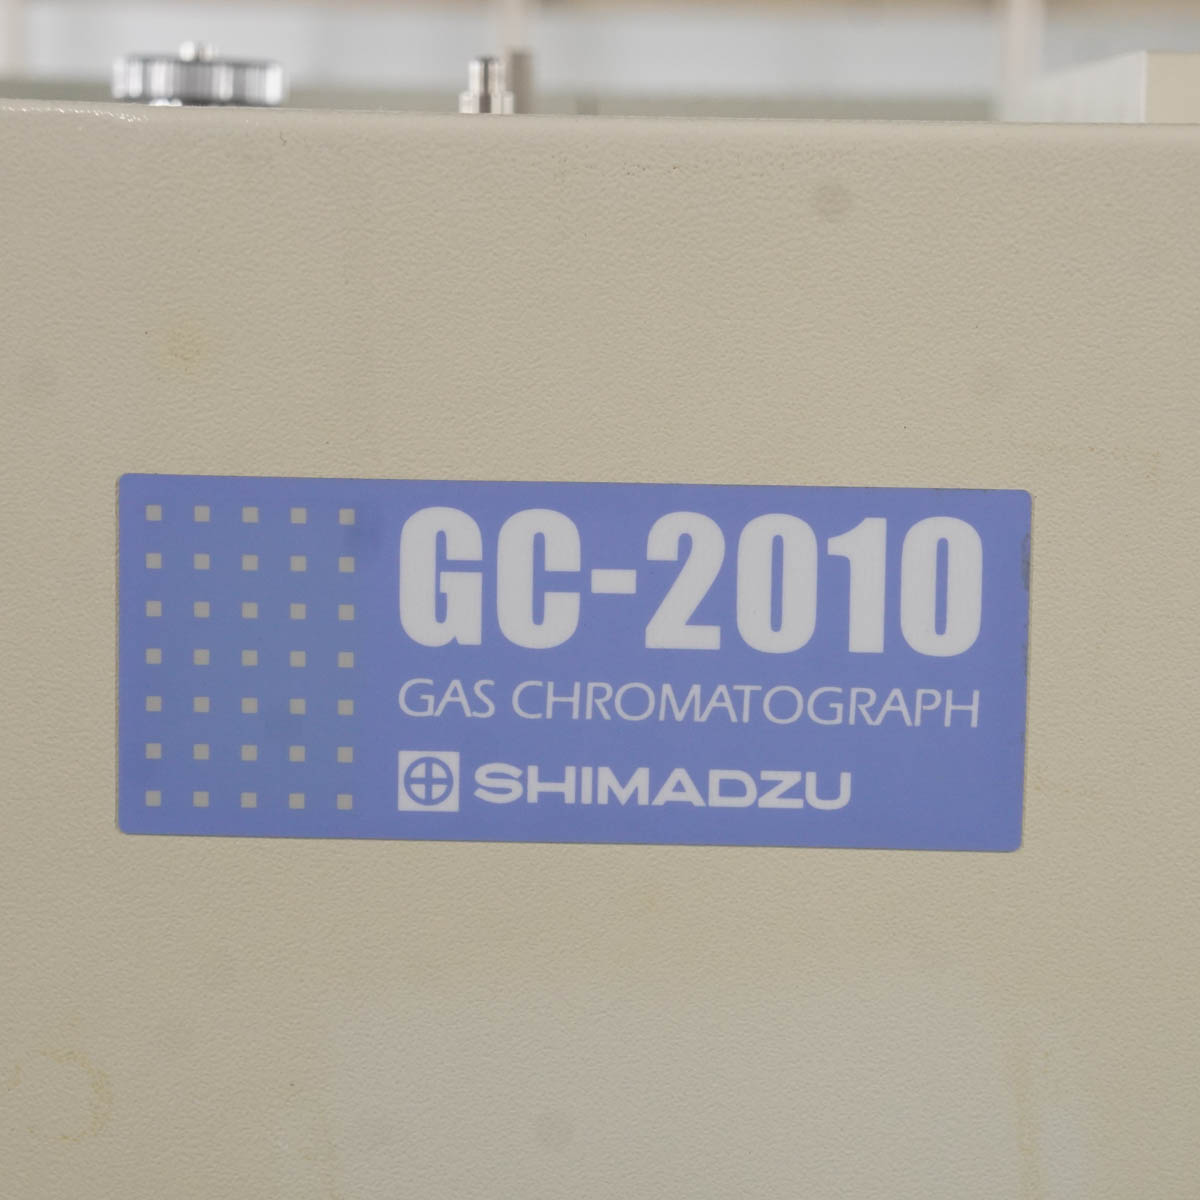 DW]USED 8日保証 セット SHIMADZU GC-2010 GAS CHROMATOGRAPH ガスクロマトグラフ AOC-20i PCSET  電源コード ソフトウェア [ST04132-0001] 分析機器,GC(ガスクロマトグラフ) 中古販売分析機器計測器総合商社ディルウィングス